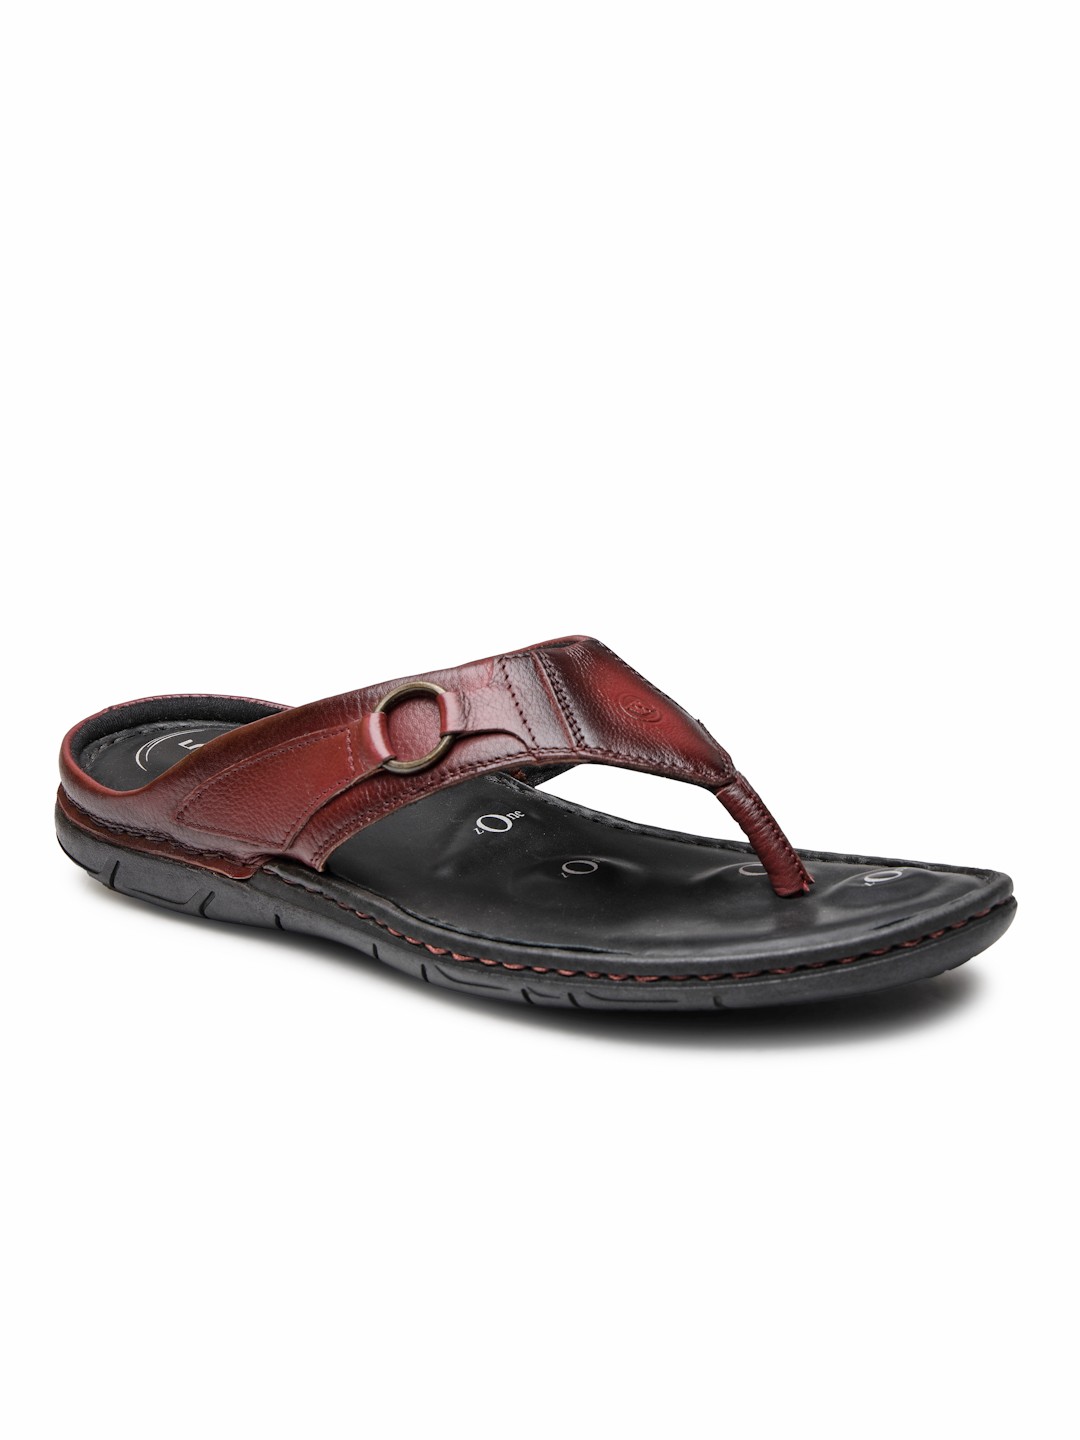 Buy Von Wellx Germany Comfort Men's Brown Slippers Riley Online in Udaipur